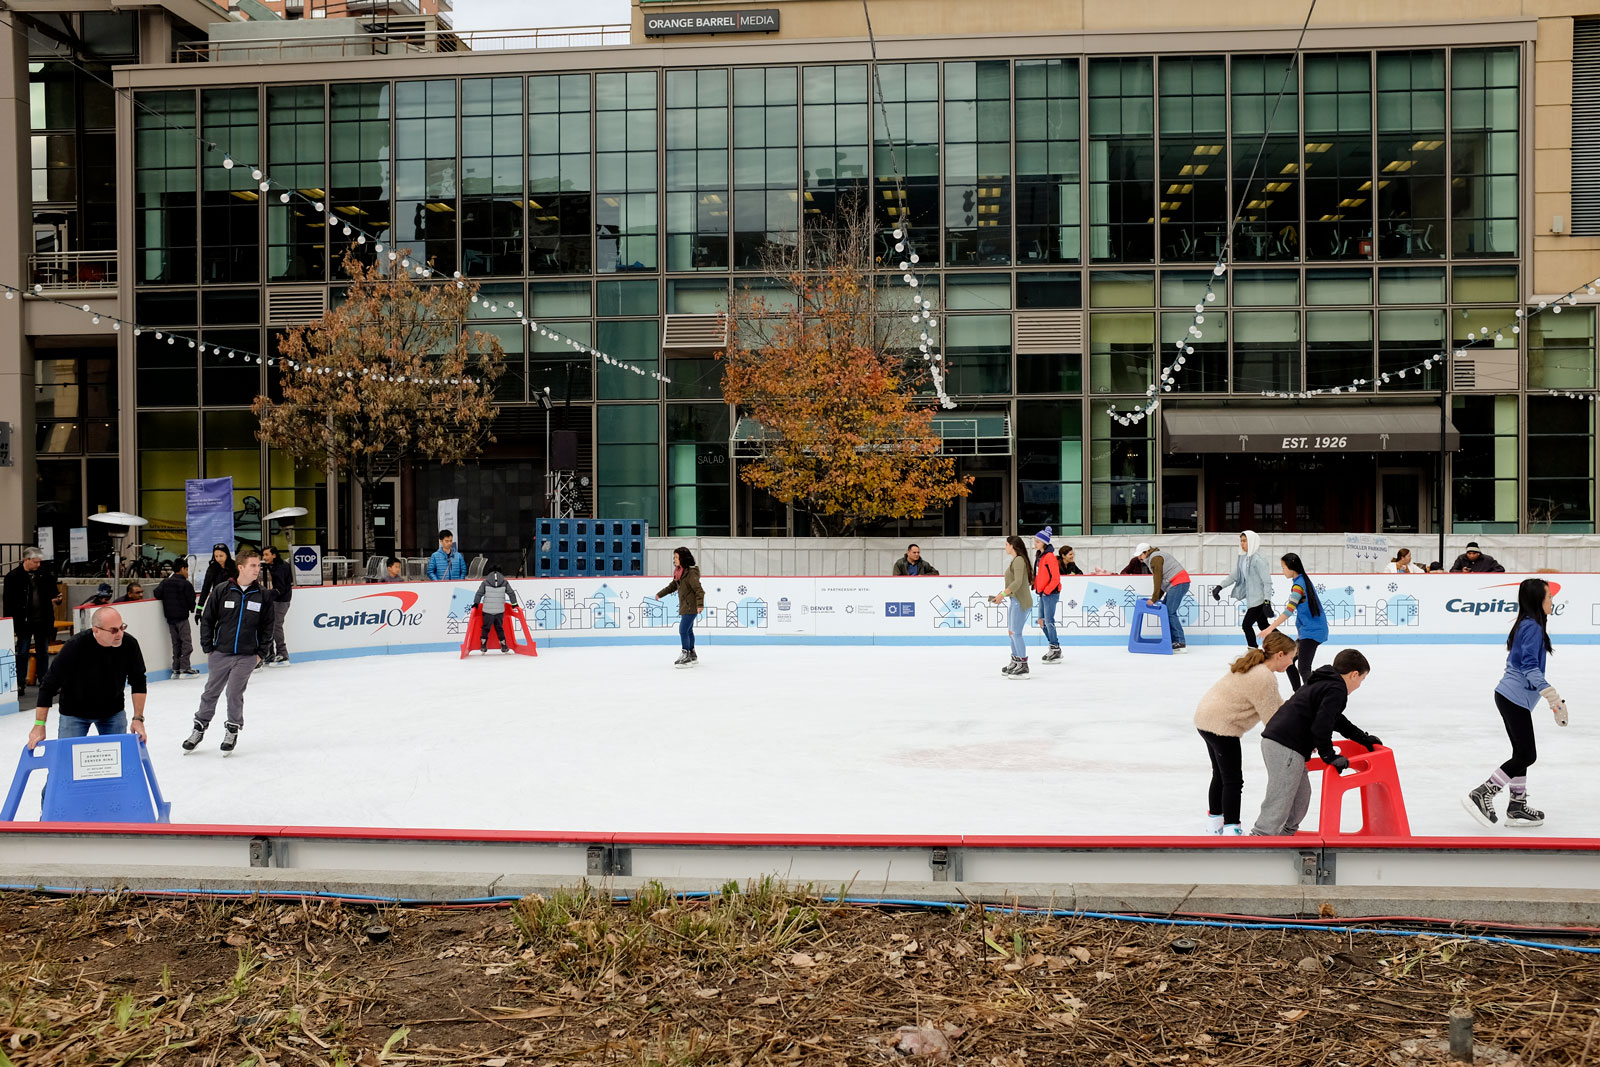 Ice skaters on a rink in Denver